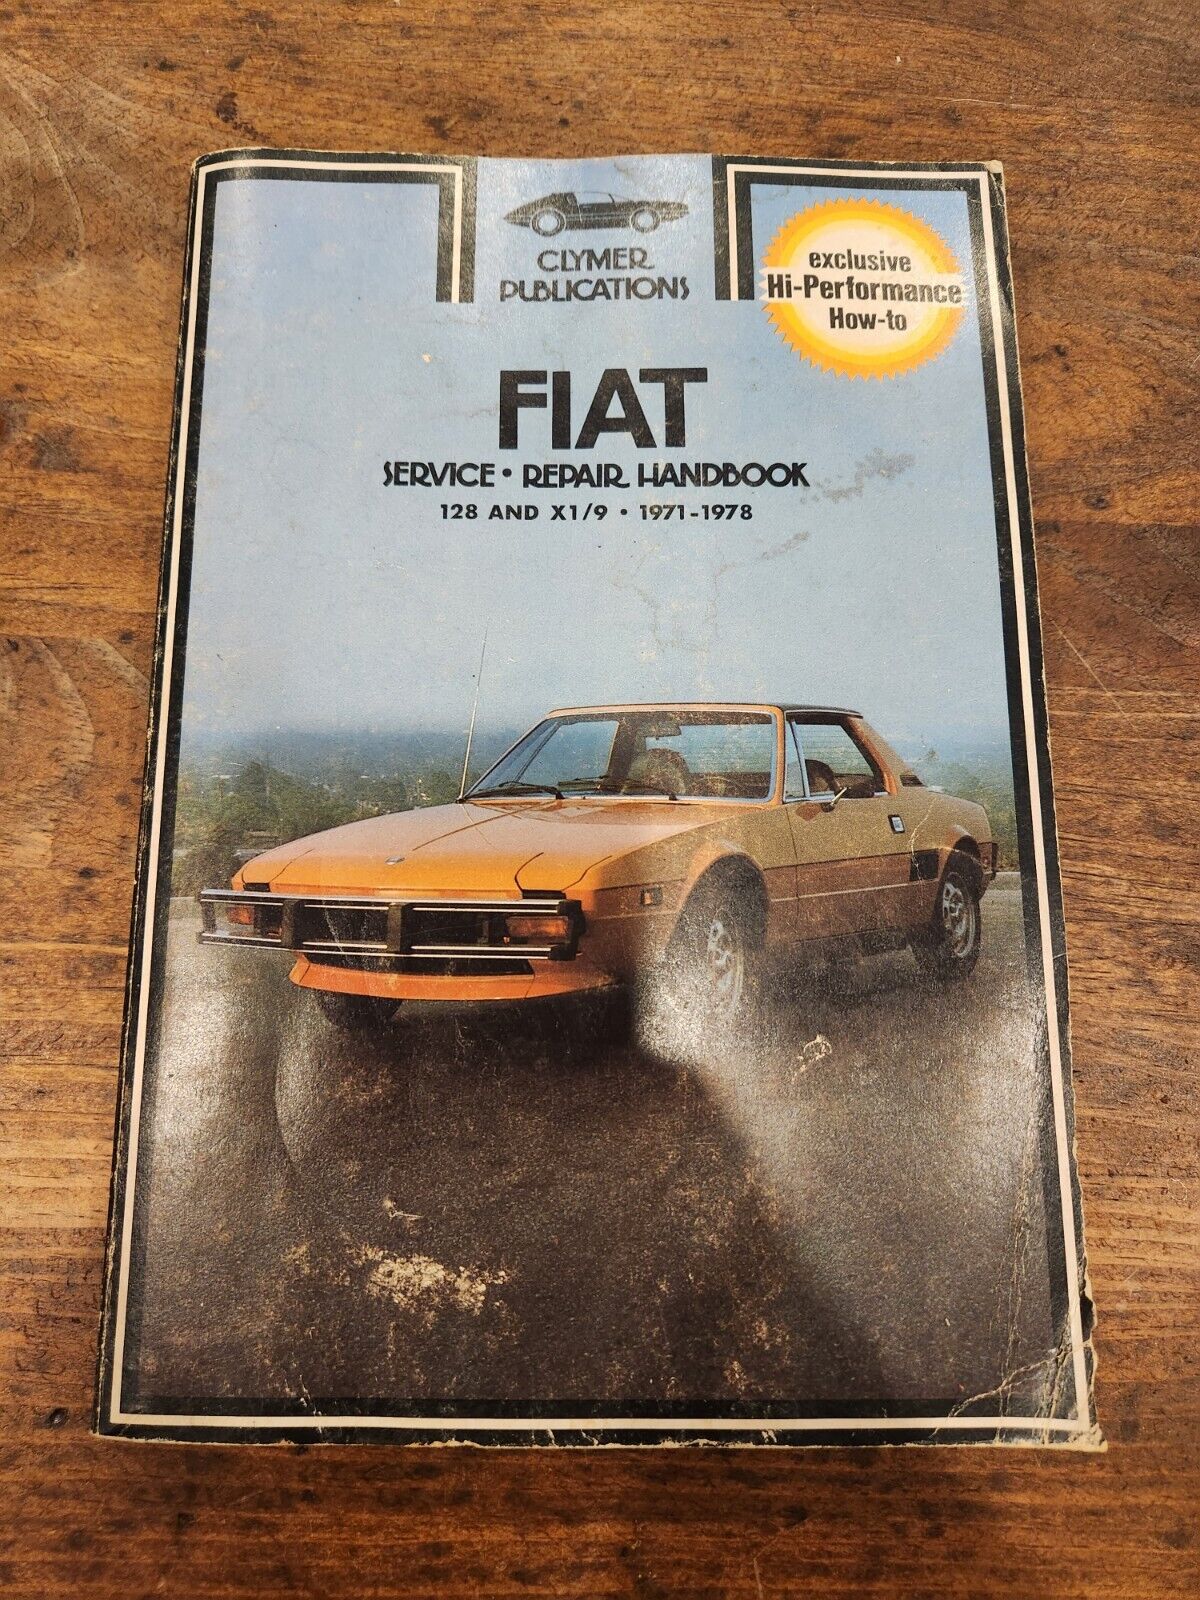 VINTAGE 1978 FIAT SERVICE REPAIR HANDBOOK CLYMER PUBLUCATIONS